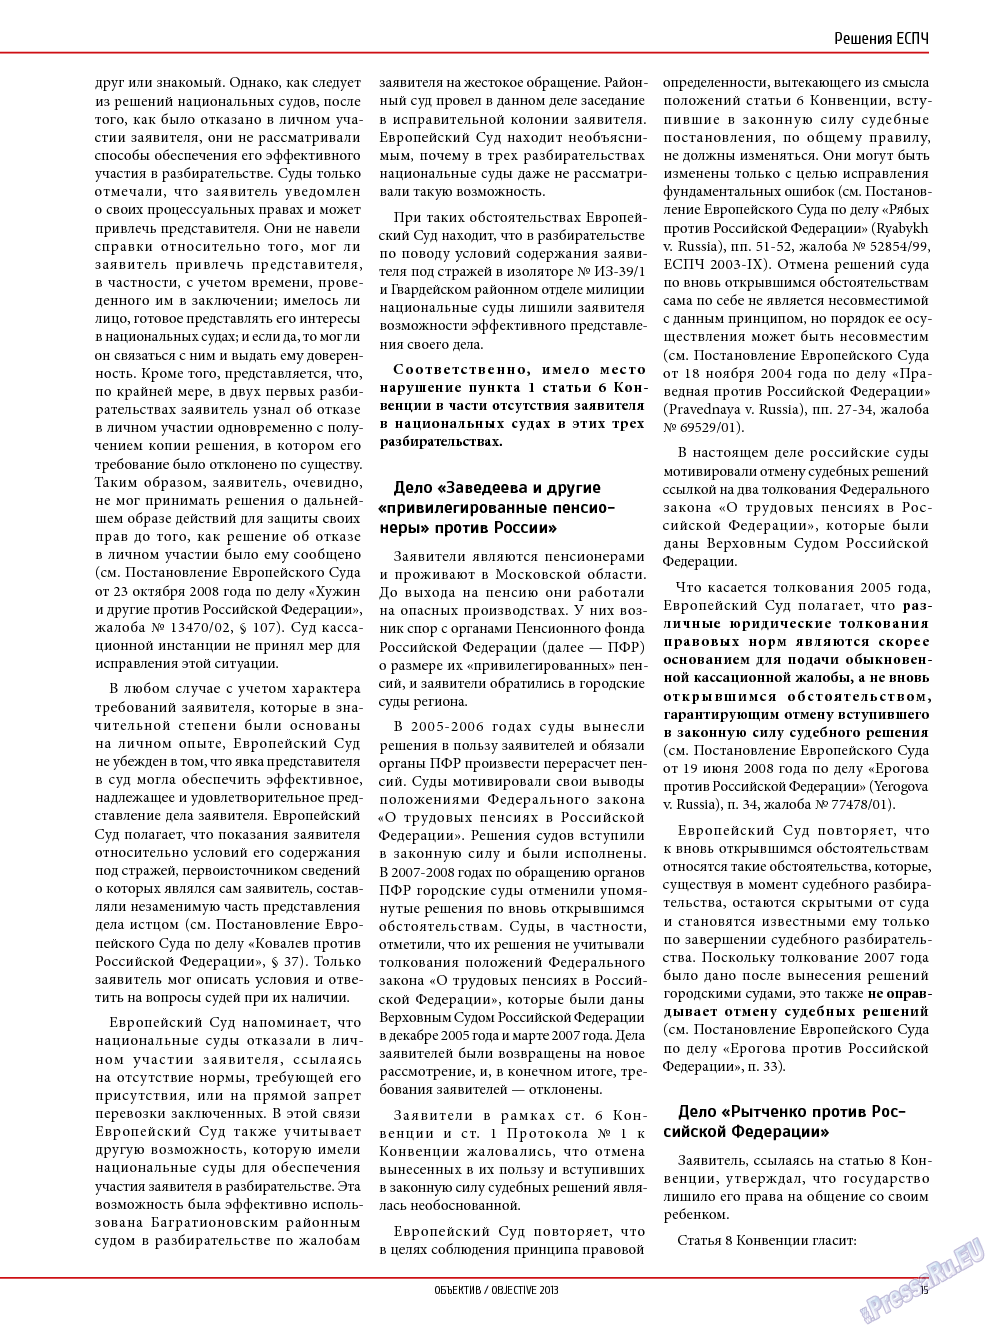 Объектив EU, журнал. 2014 №1 стр.15